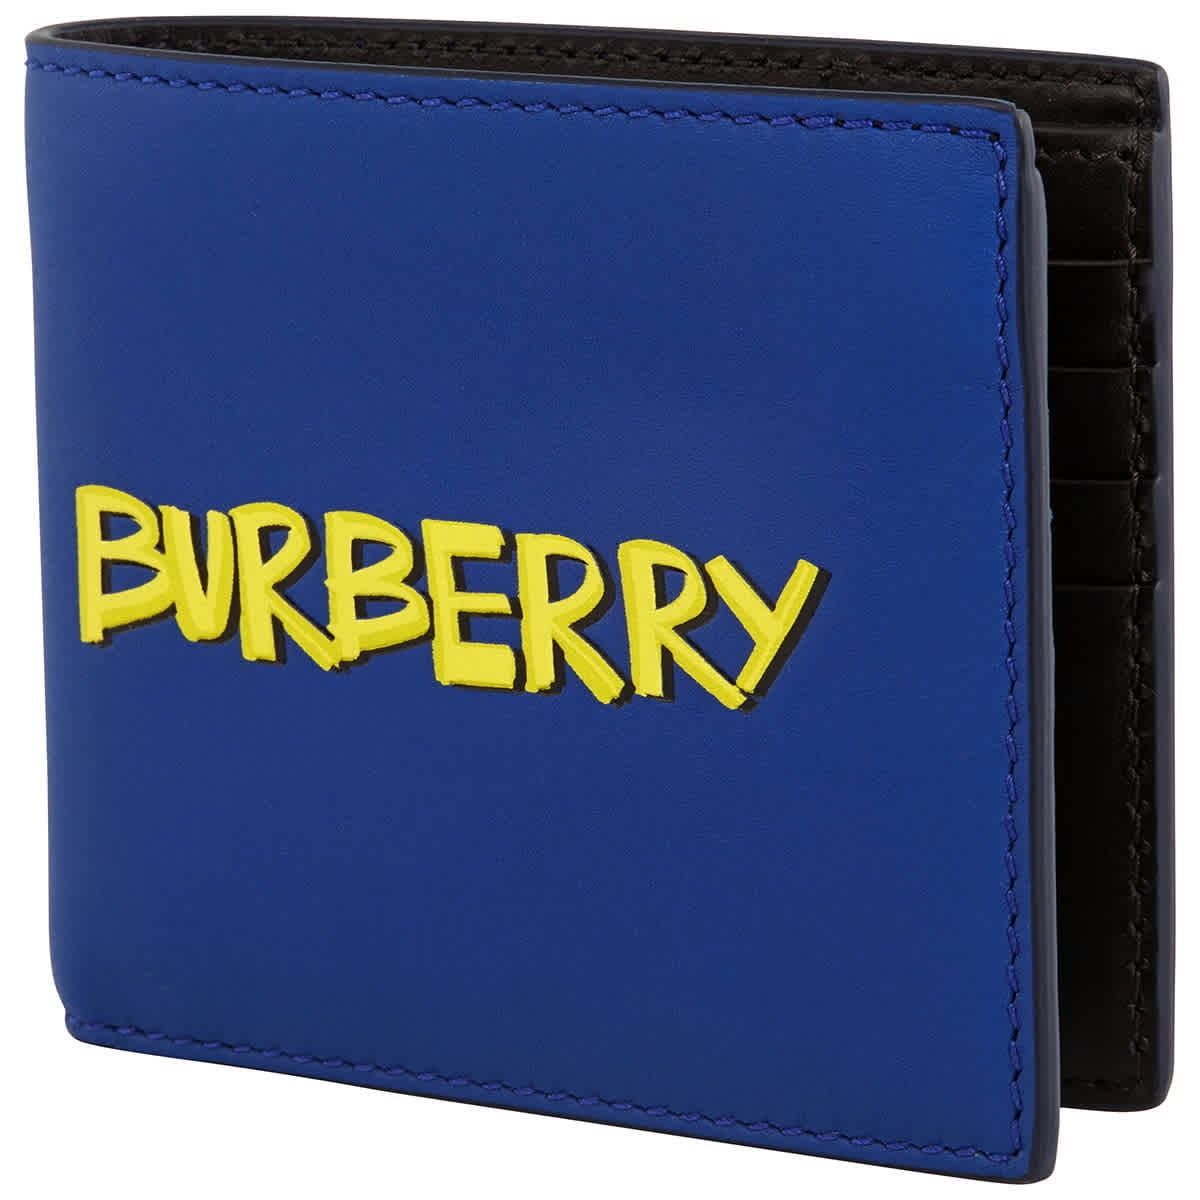 Burberry Men's Graffiti Print Leather International Bifold Wallet -  